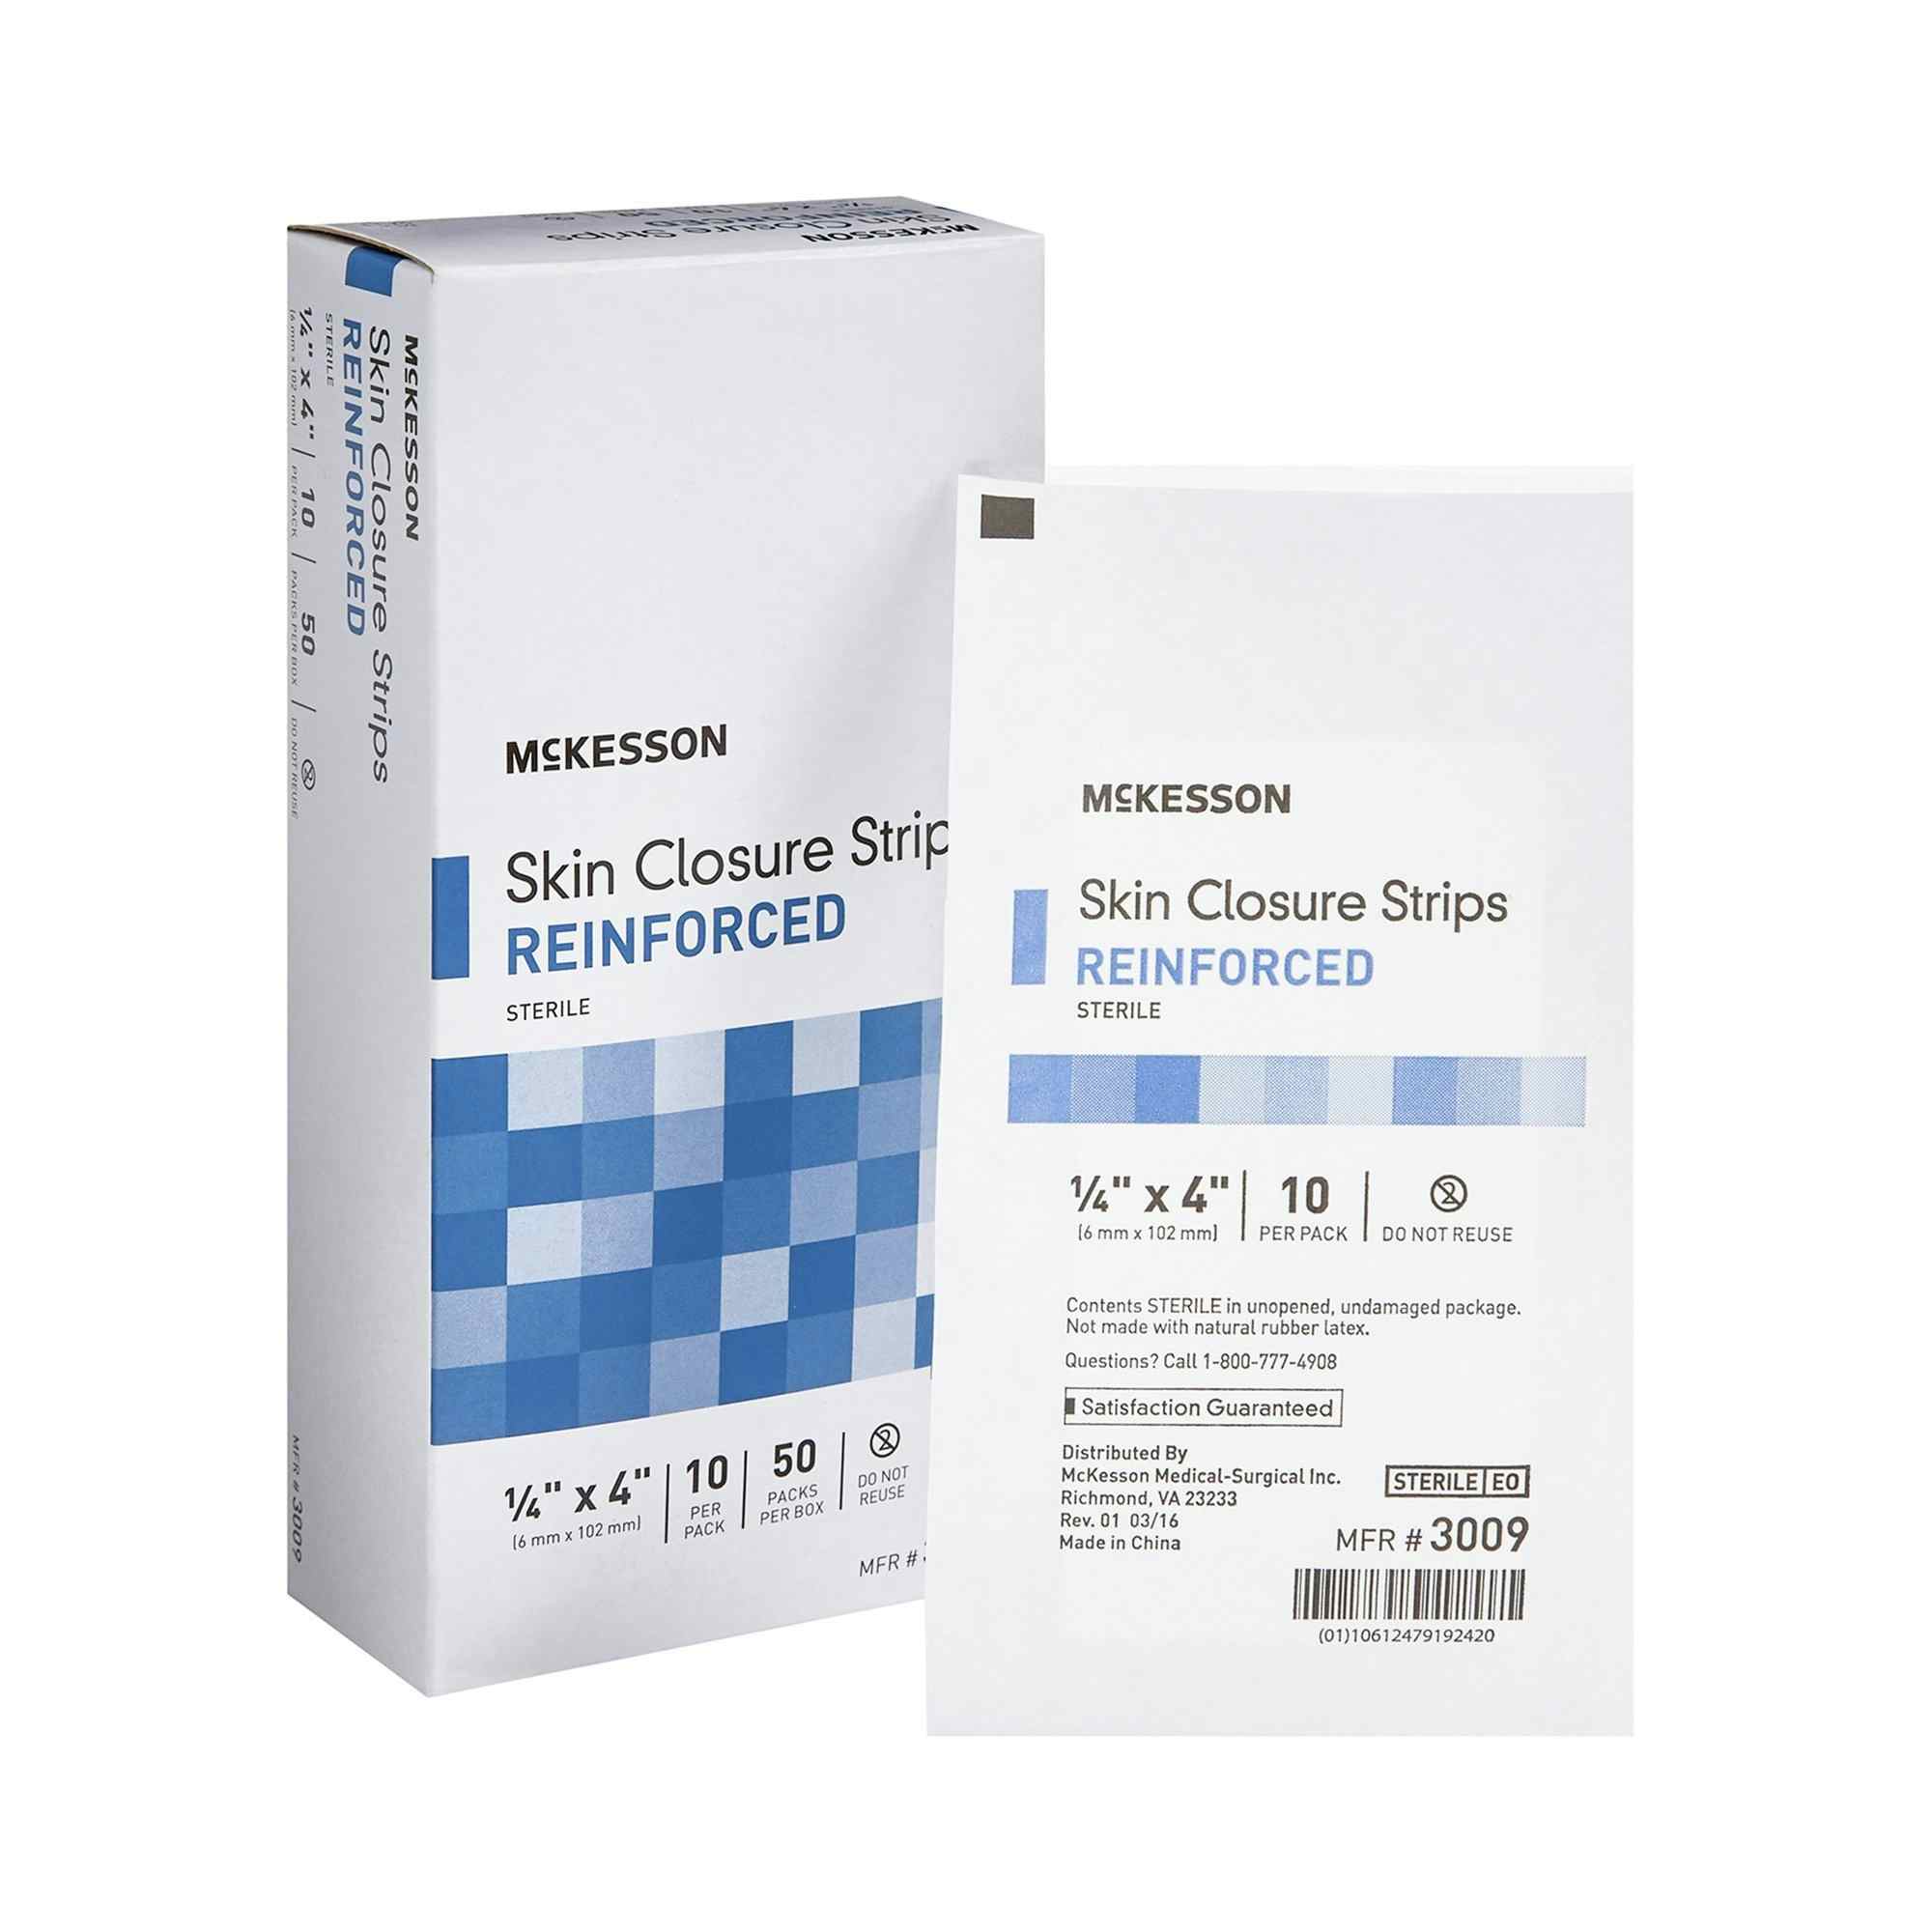 McKesson Skin Closure Strip, Sterile, Reinforced, 3009, Box of 50